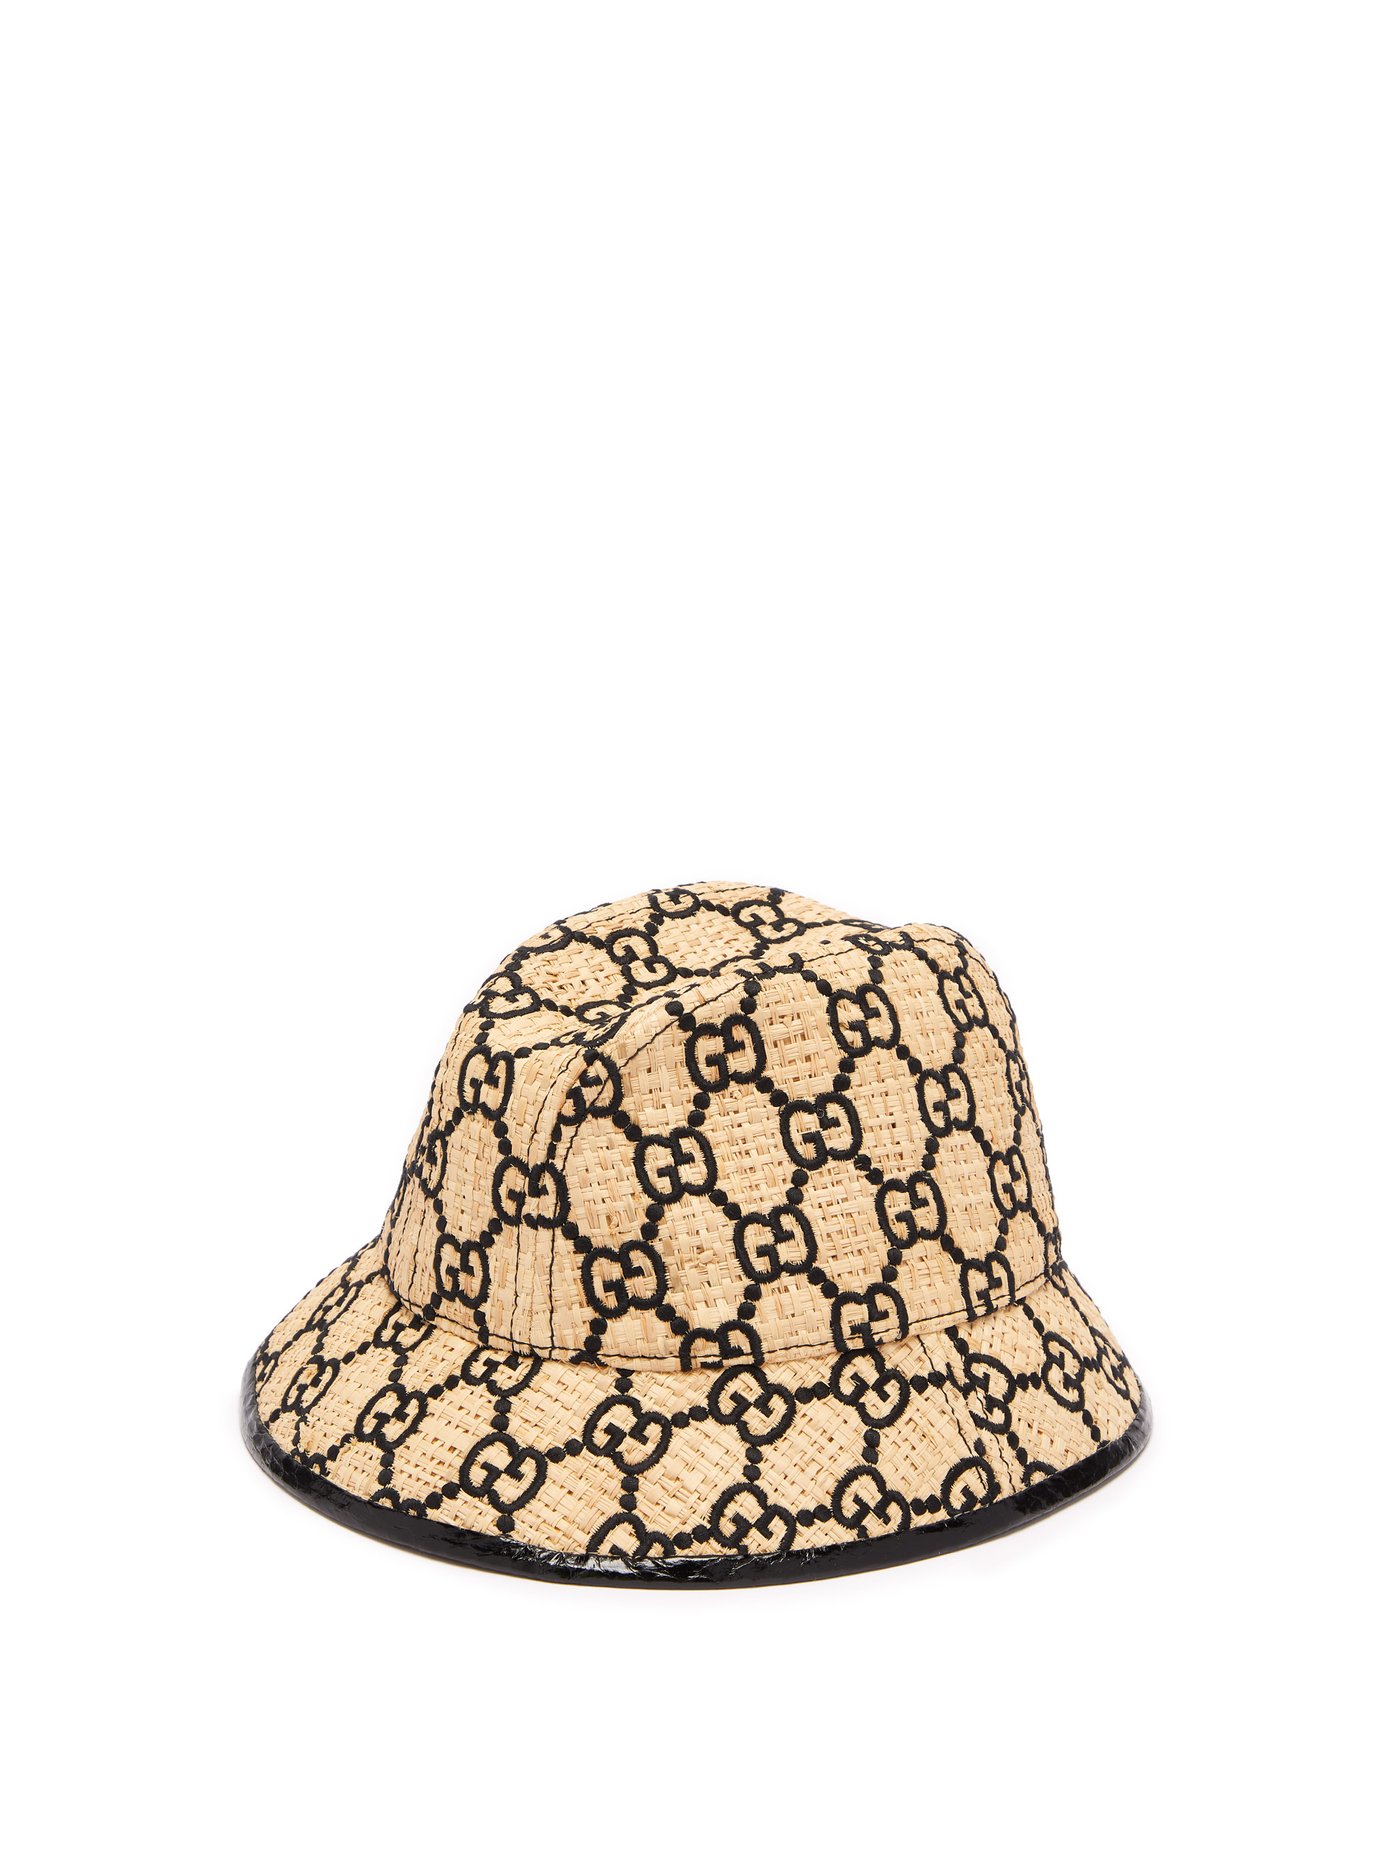 gucci fisherman hat